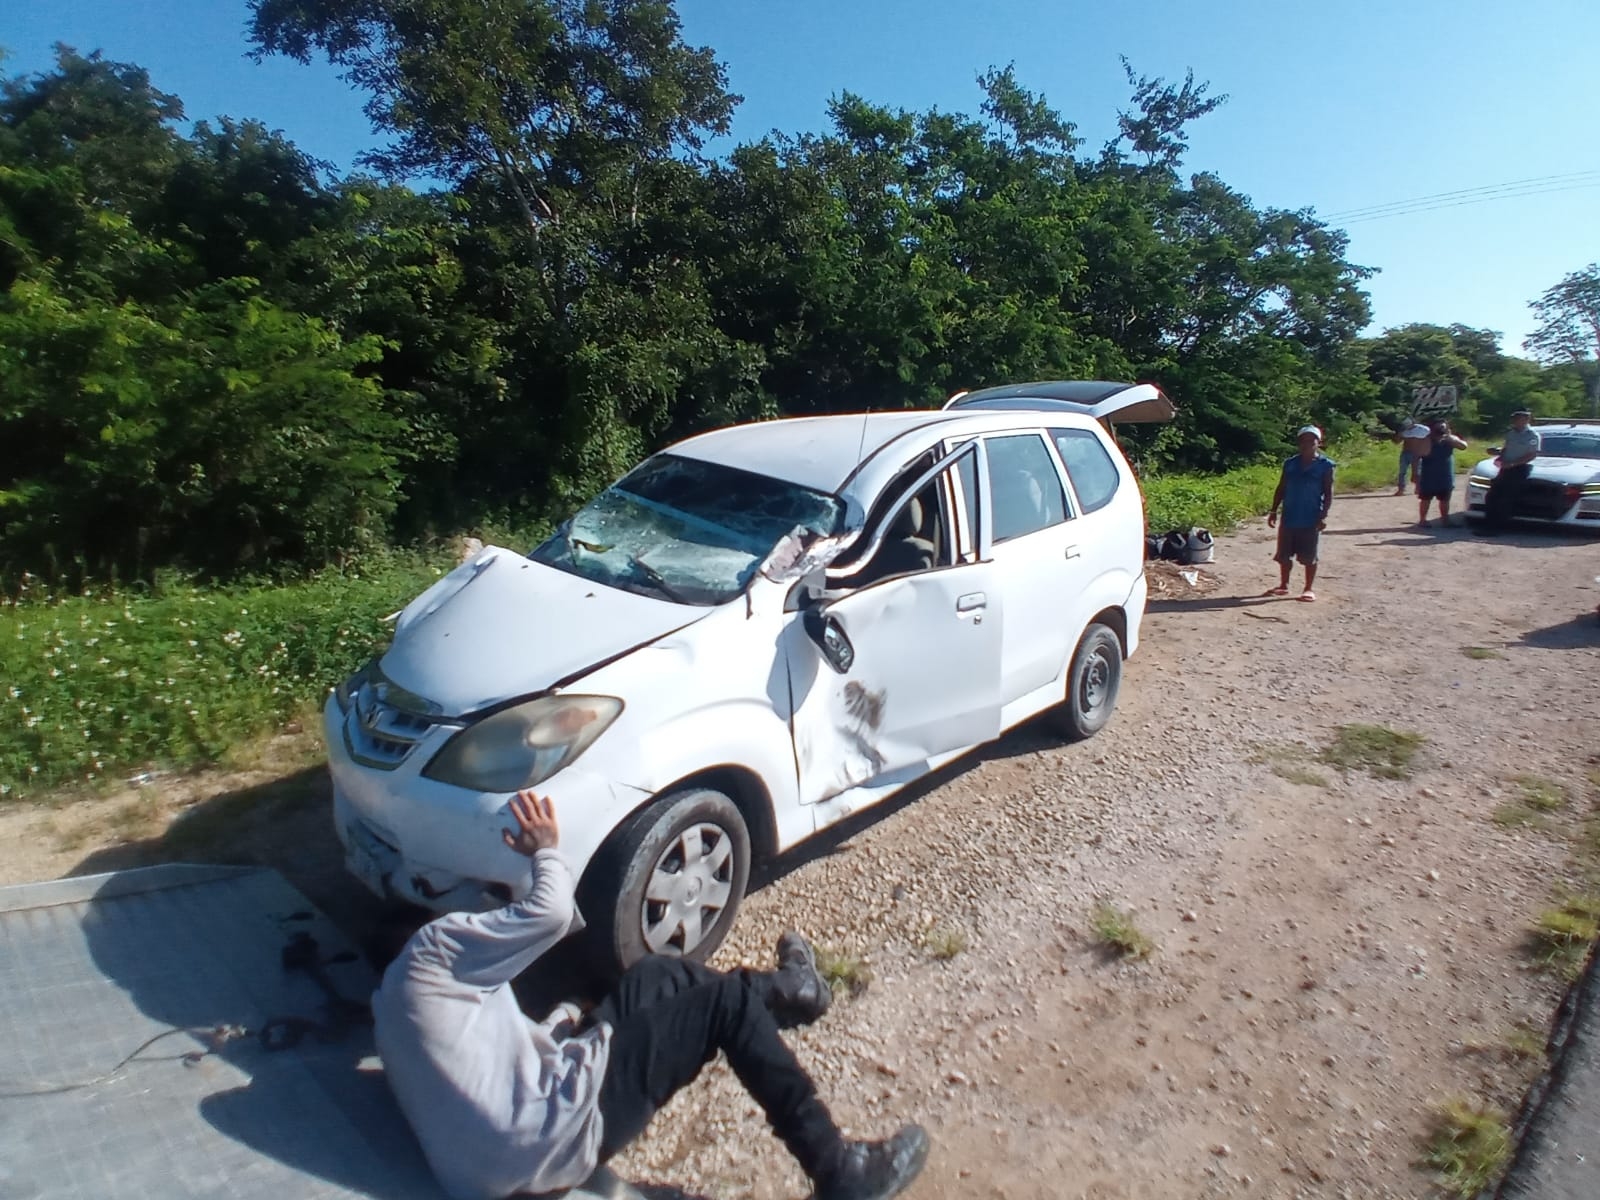 Conductor choca contra un tráiler en la carretera Motul-Mérida